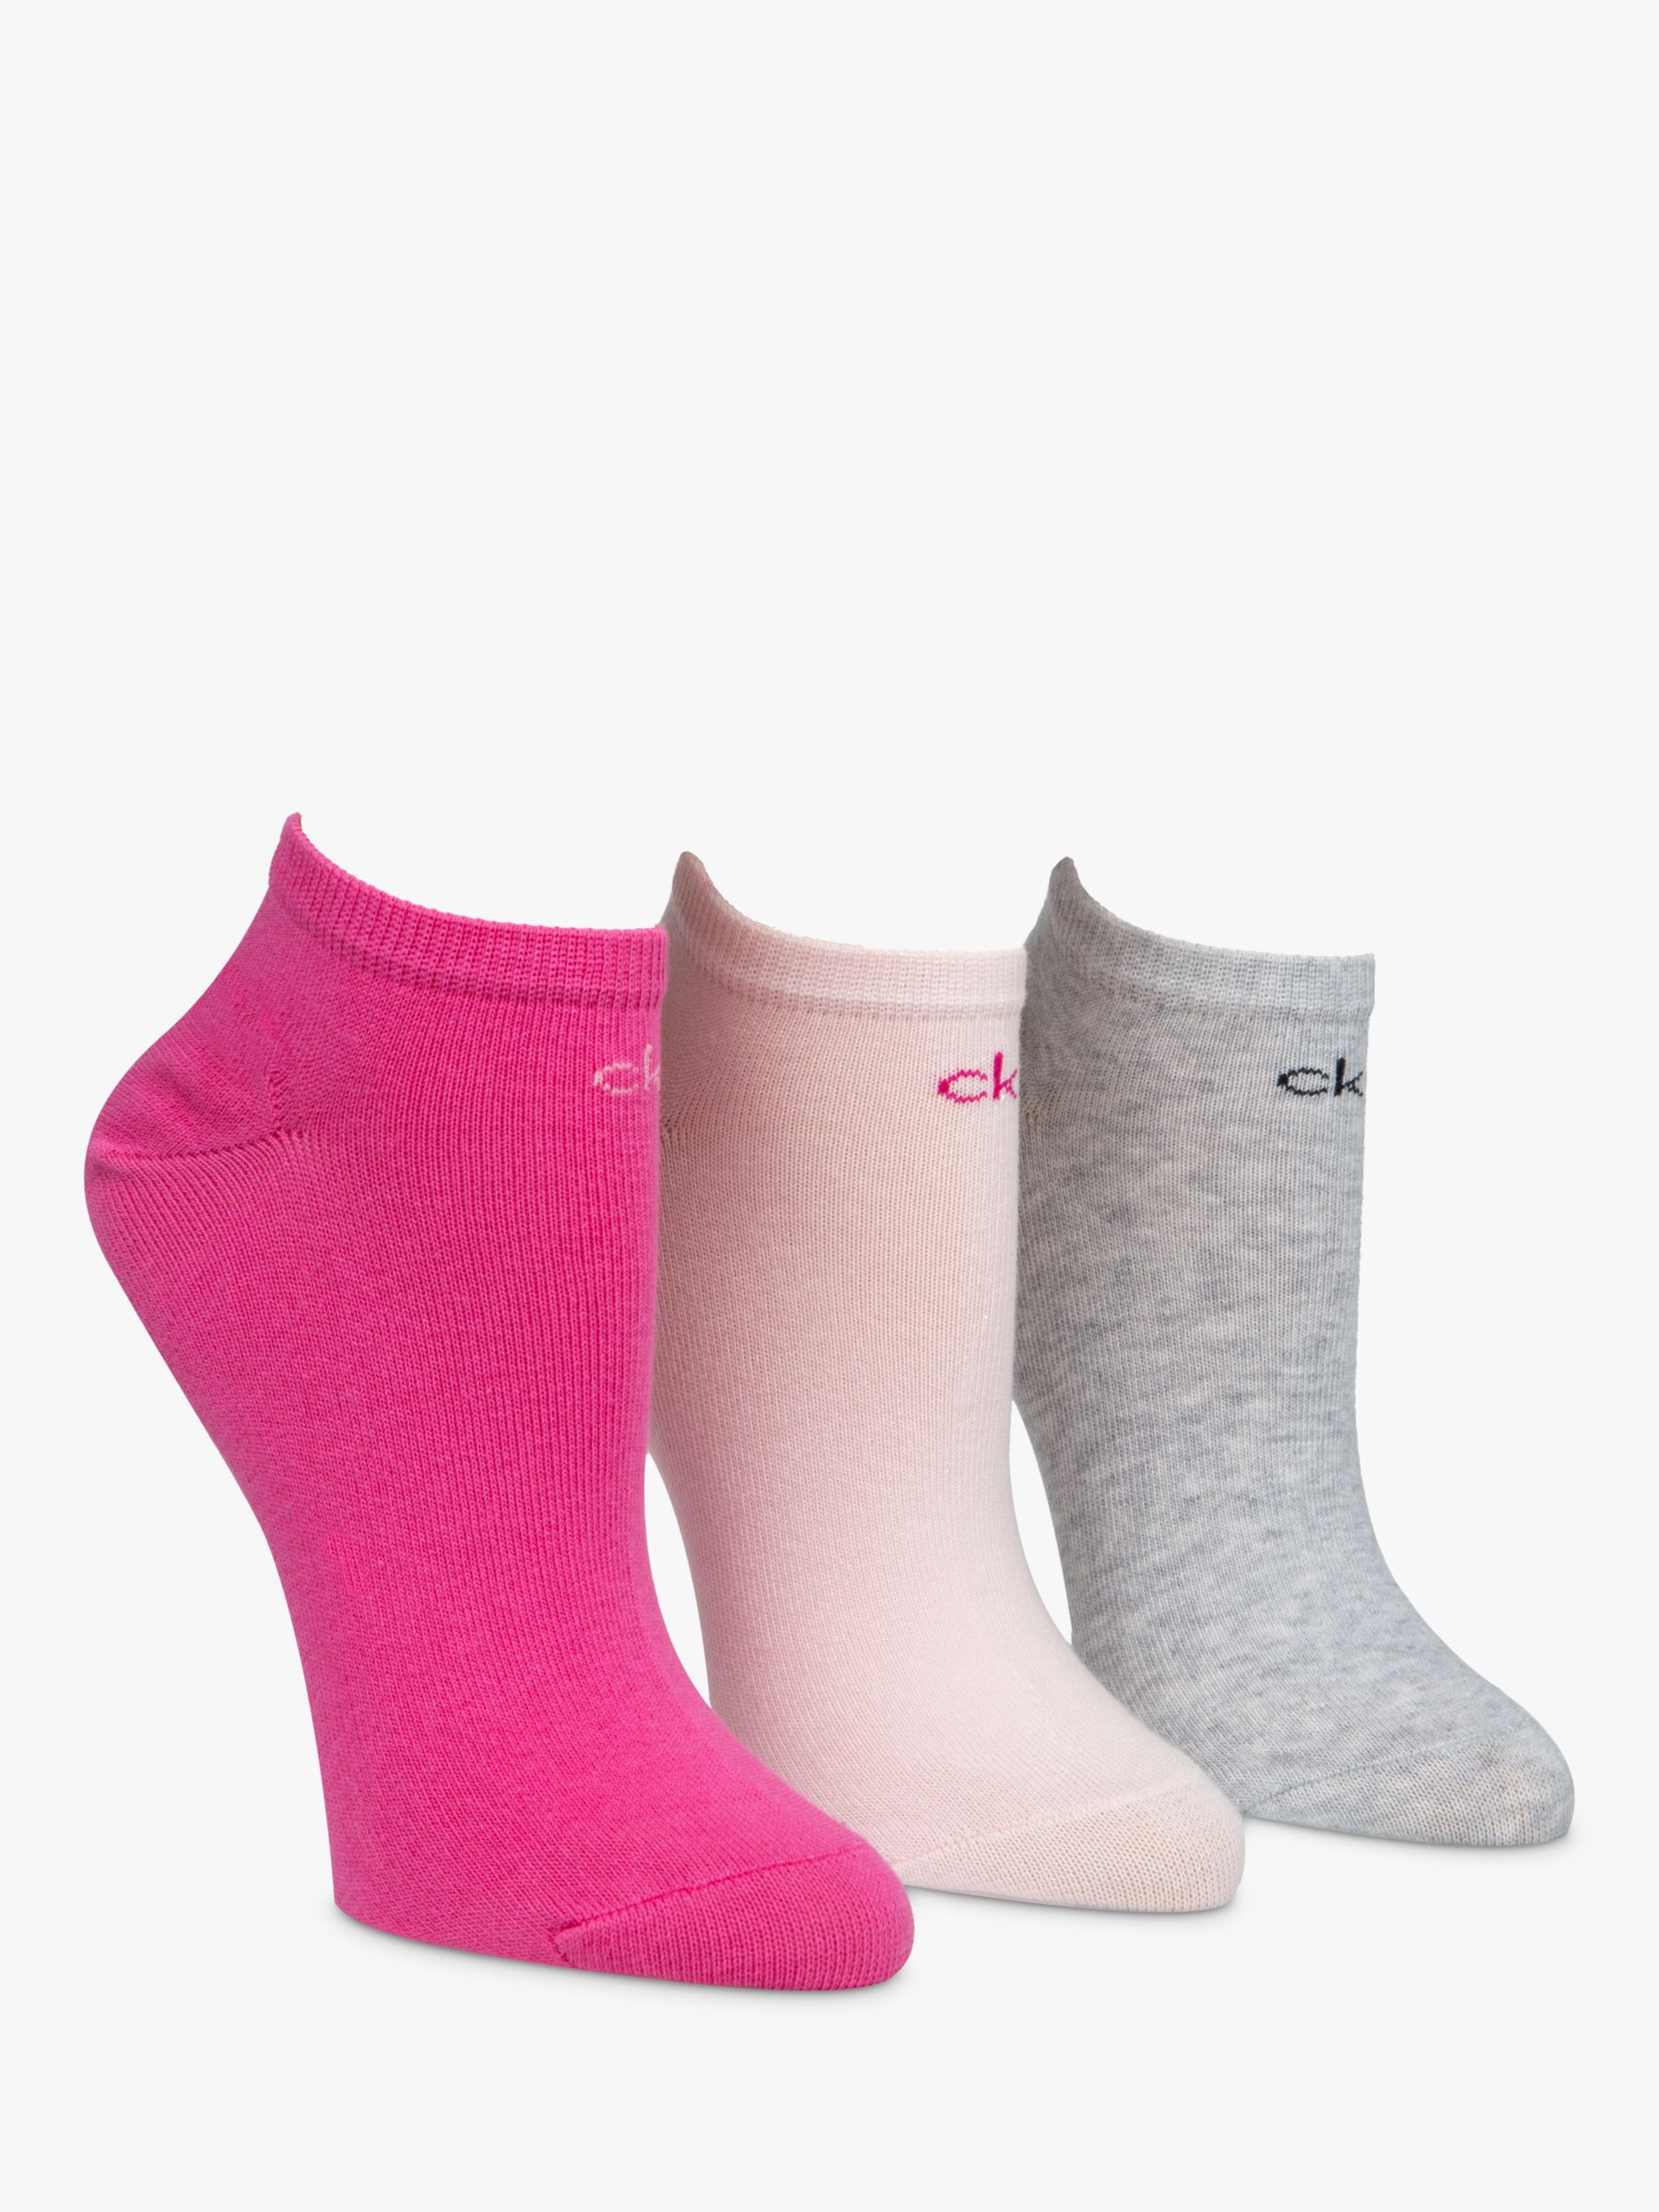 Calvin Klein Chloe Liner Socks, Pack of 3, Pink/Multi at John Lewis ...